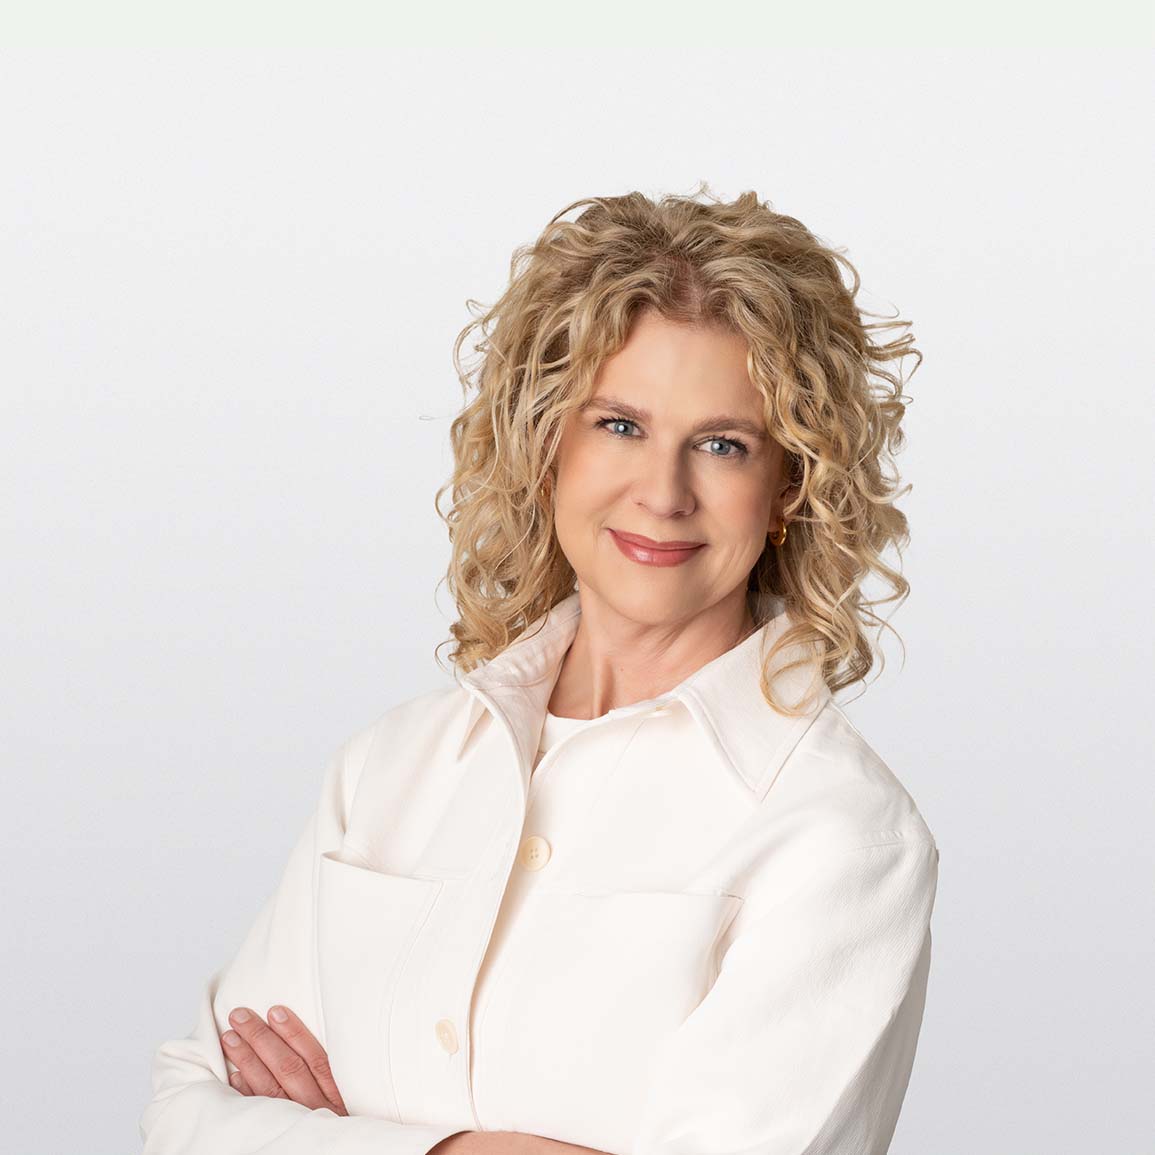 Image of Cindy Dorais senior financial advisor on white background